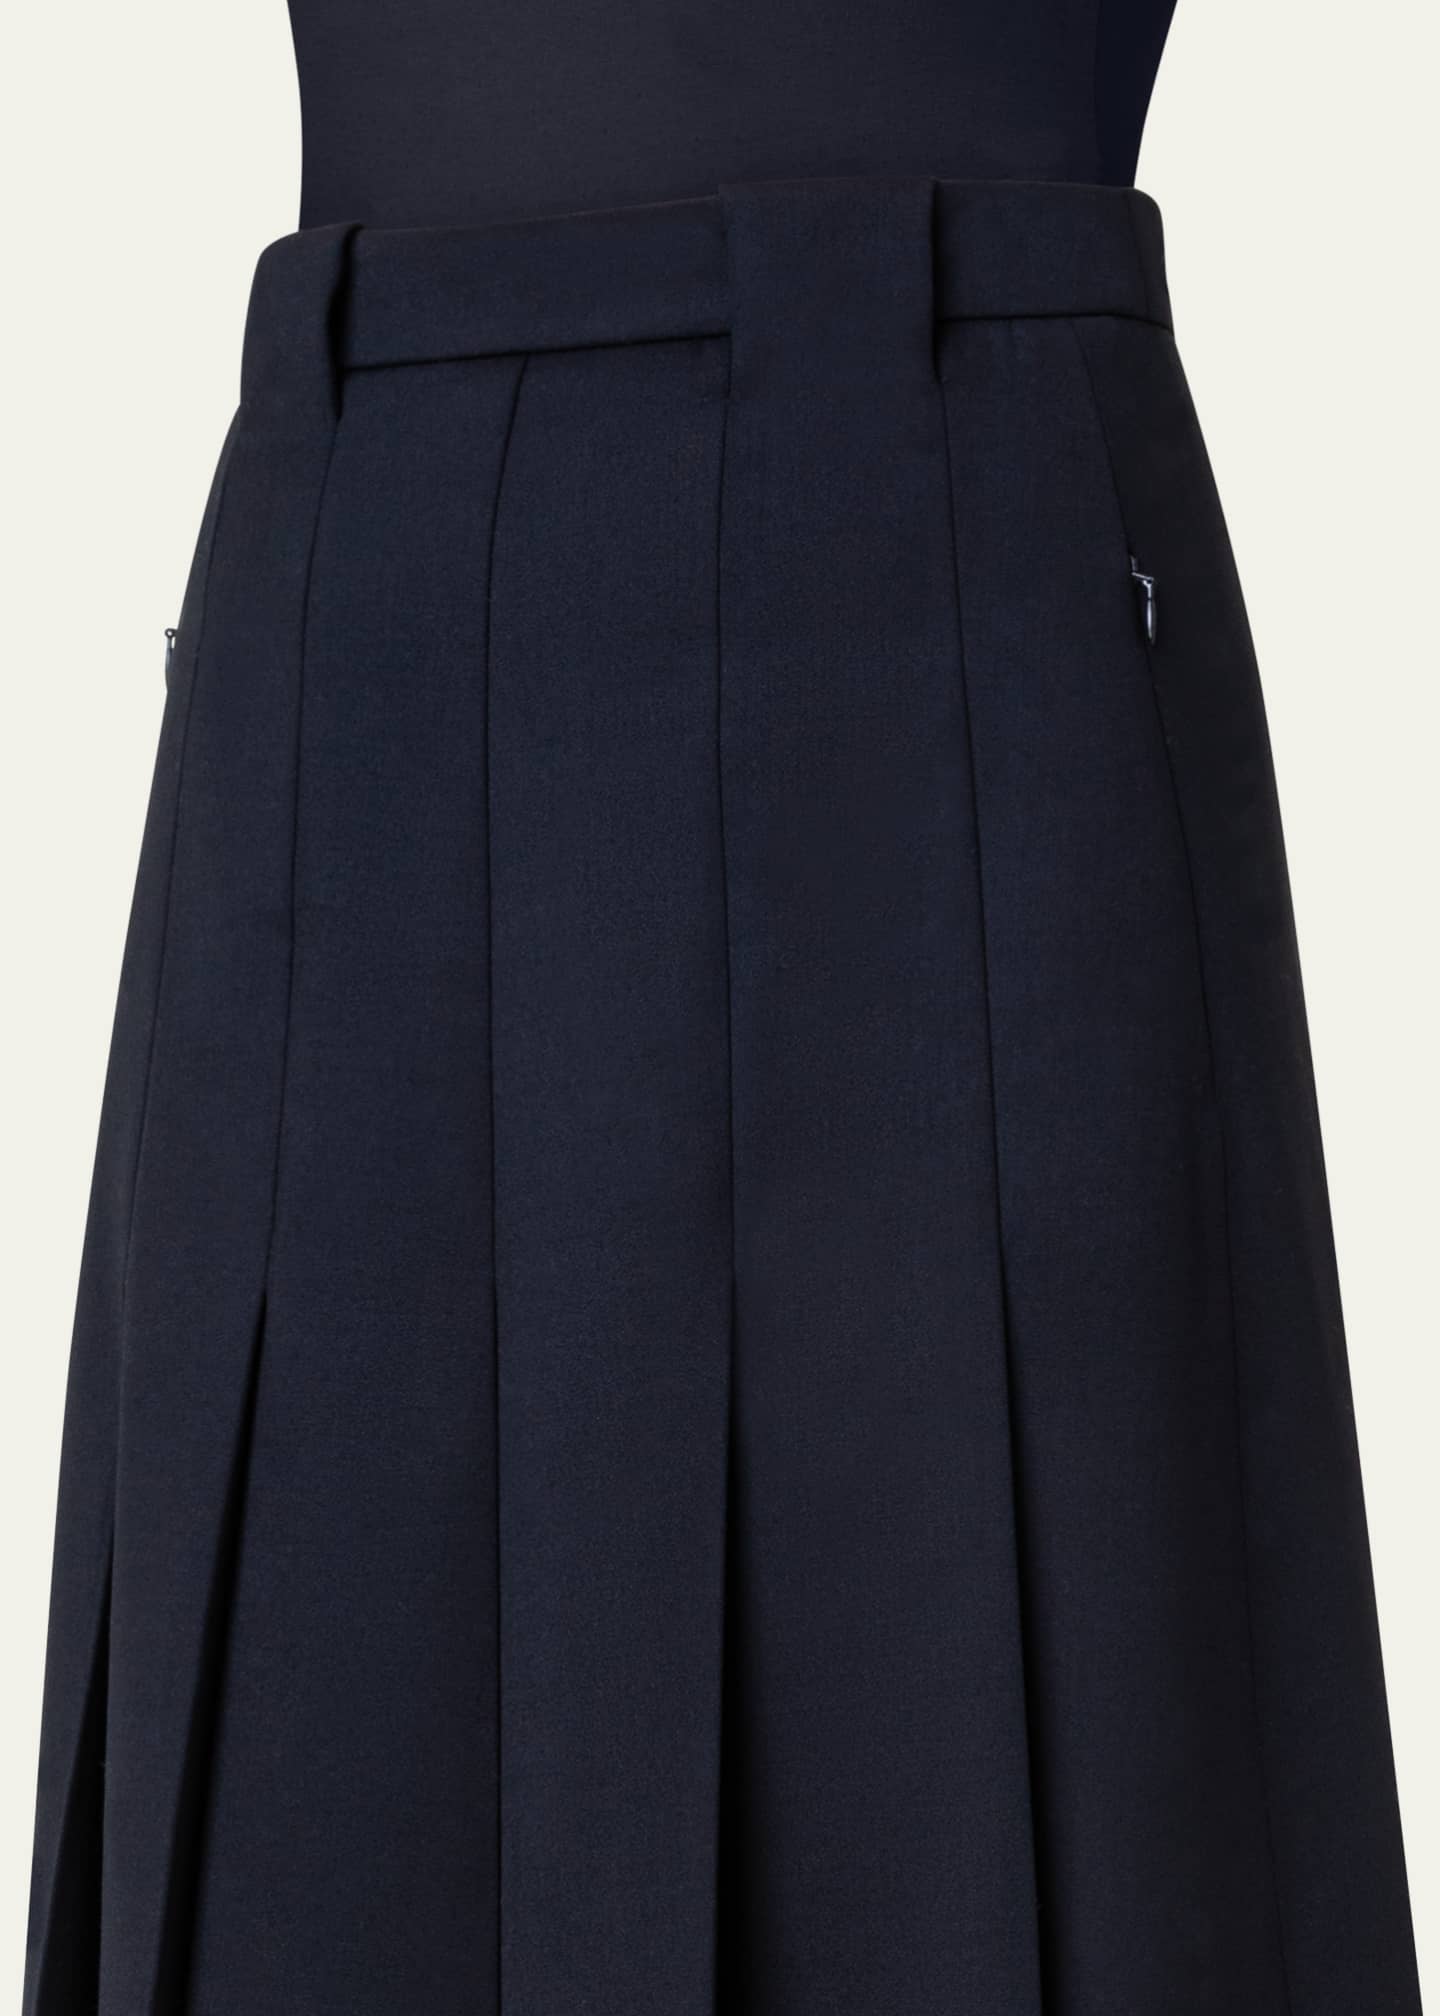 Akris Fit-Flare Wool Pleated Skirt with Belt - Bergdorf Goodman